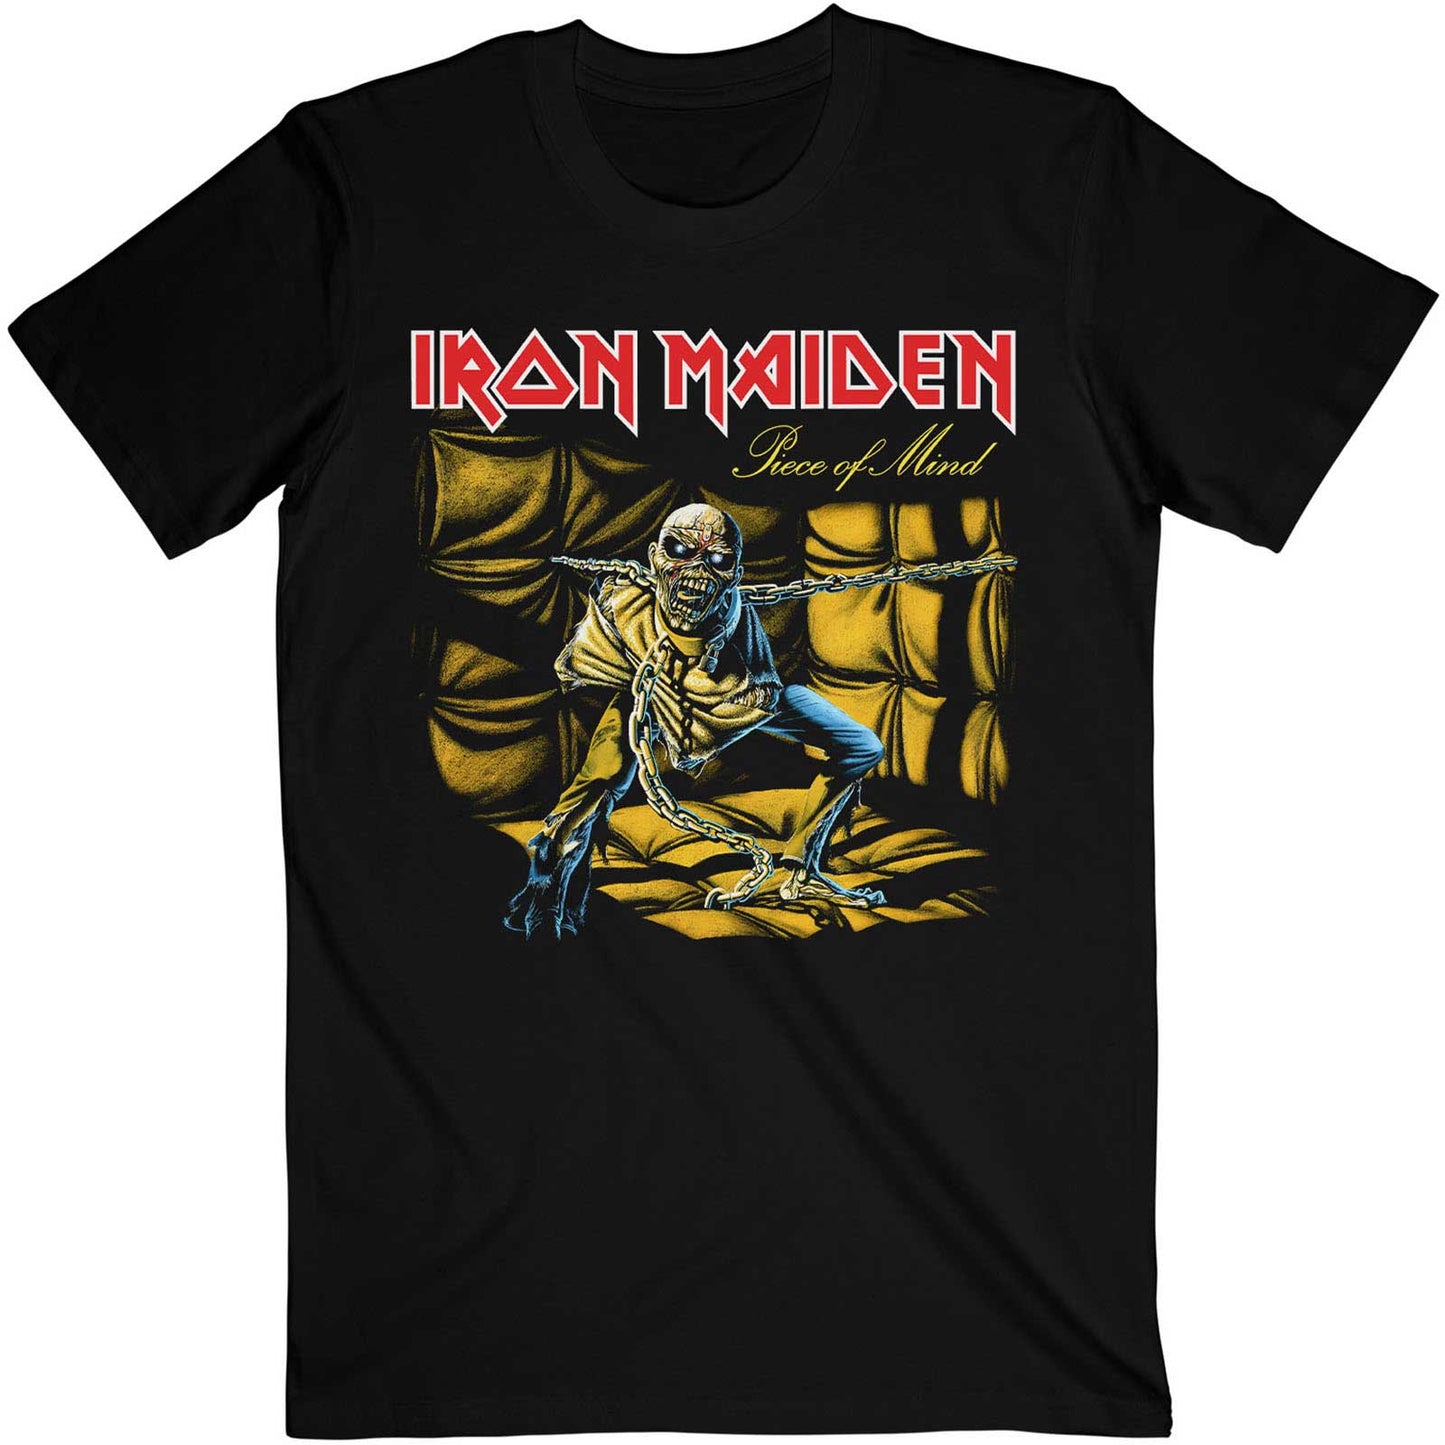 Iron Maiden T-Shirt - Piece of Mind Album Cover (Unisex)